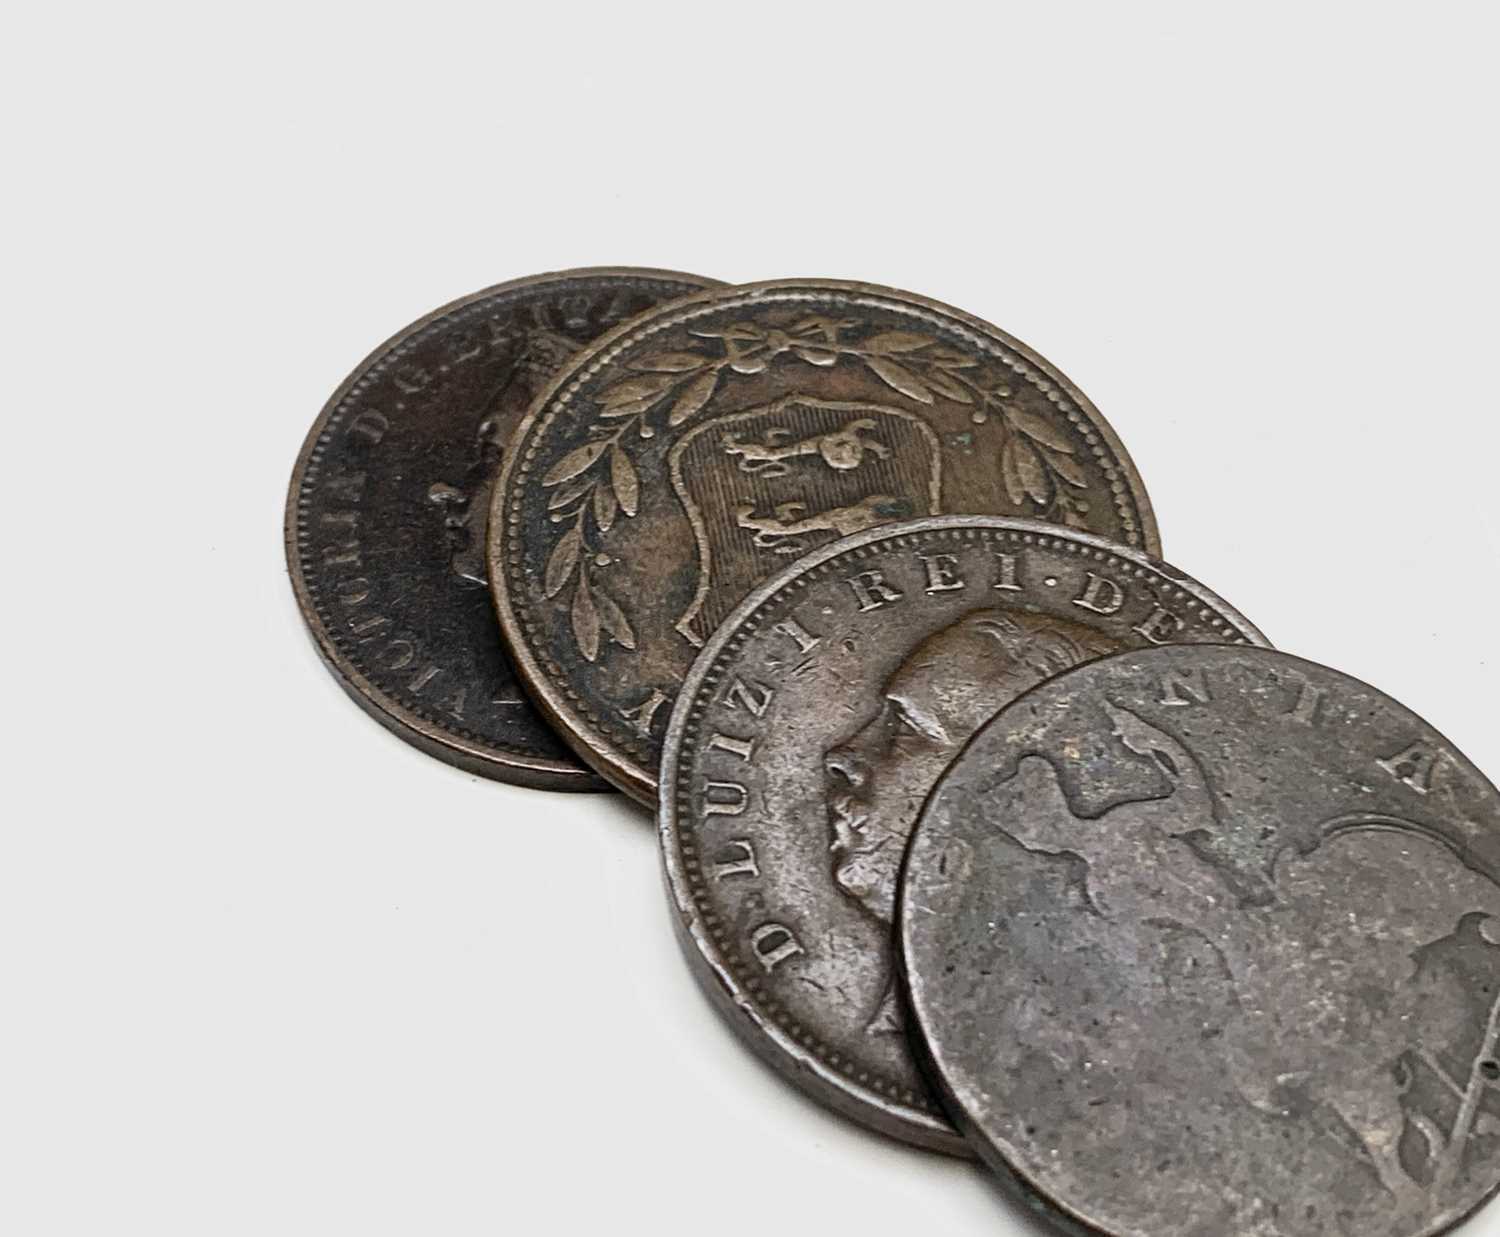 Lot 31 - Coins & Tokens - Lot comprises £1 face value...